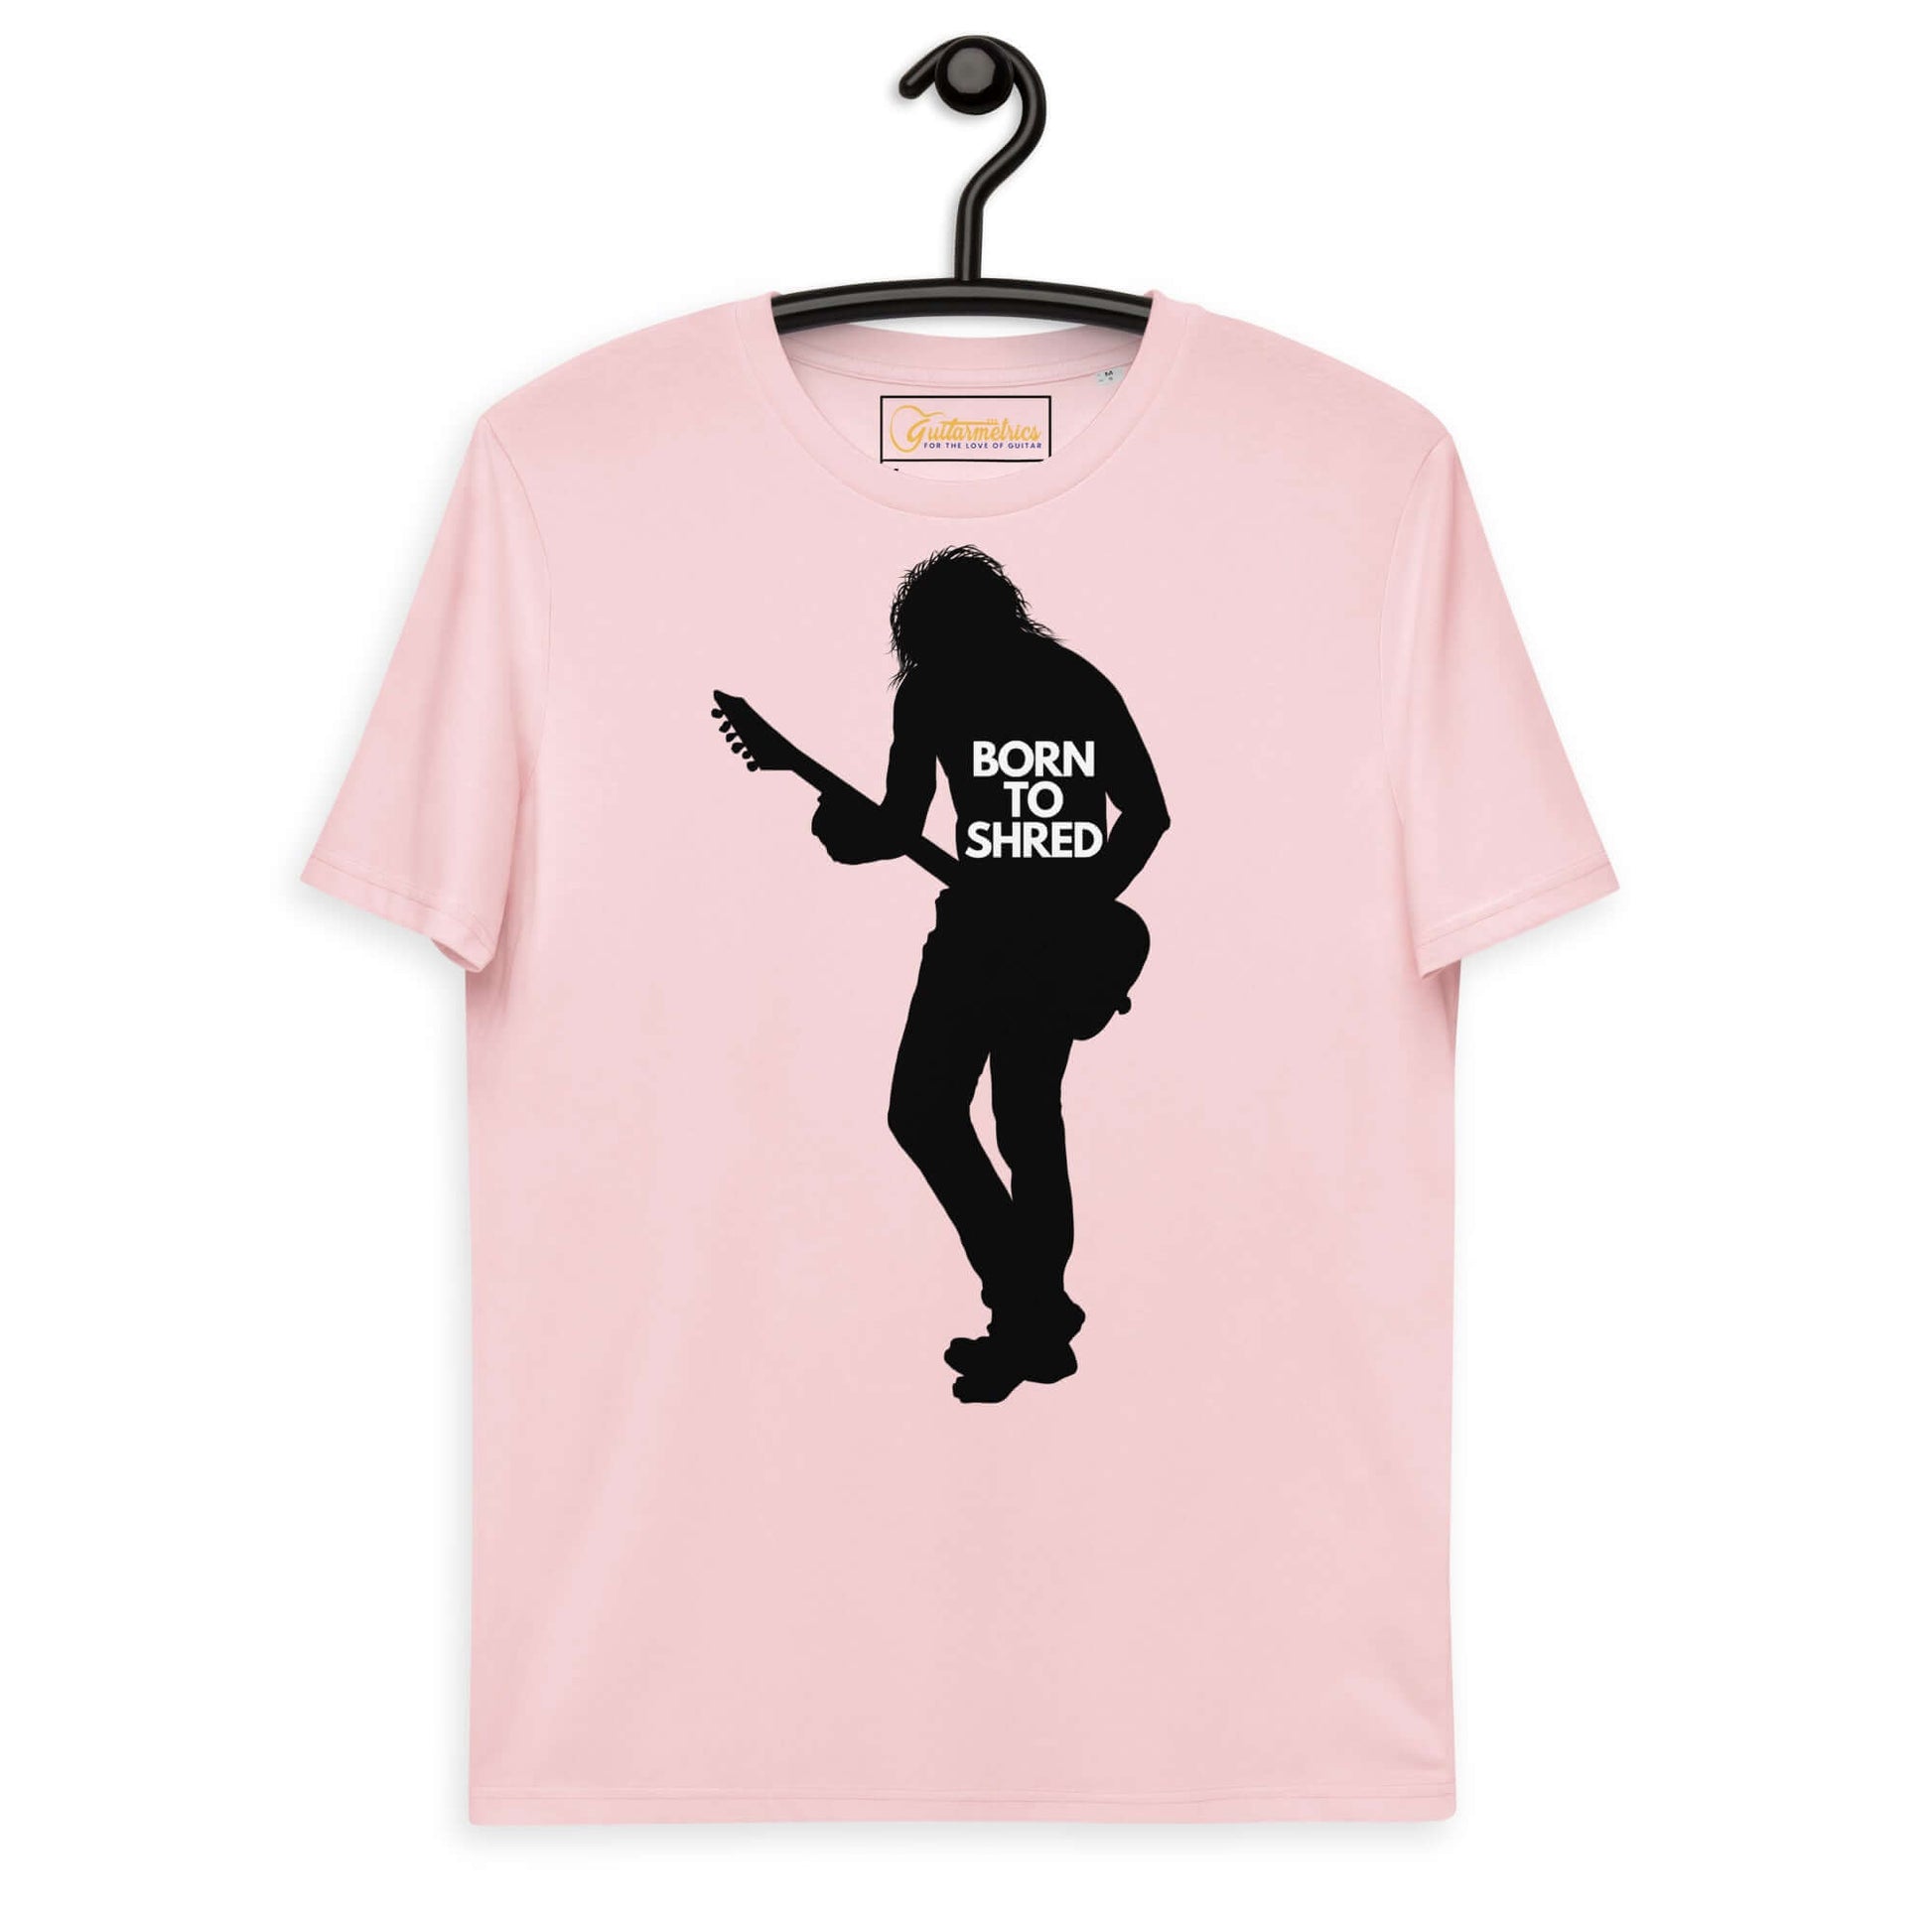 Born to shred Unisex organic cotton t-shirt Cotton Pink guitarmetrics